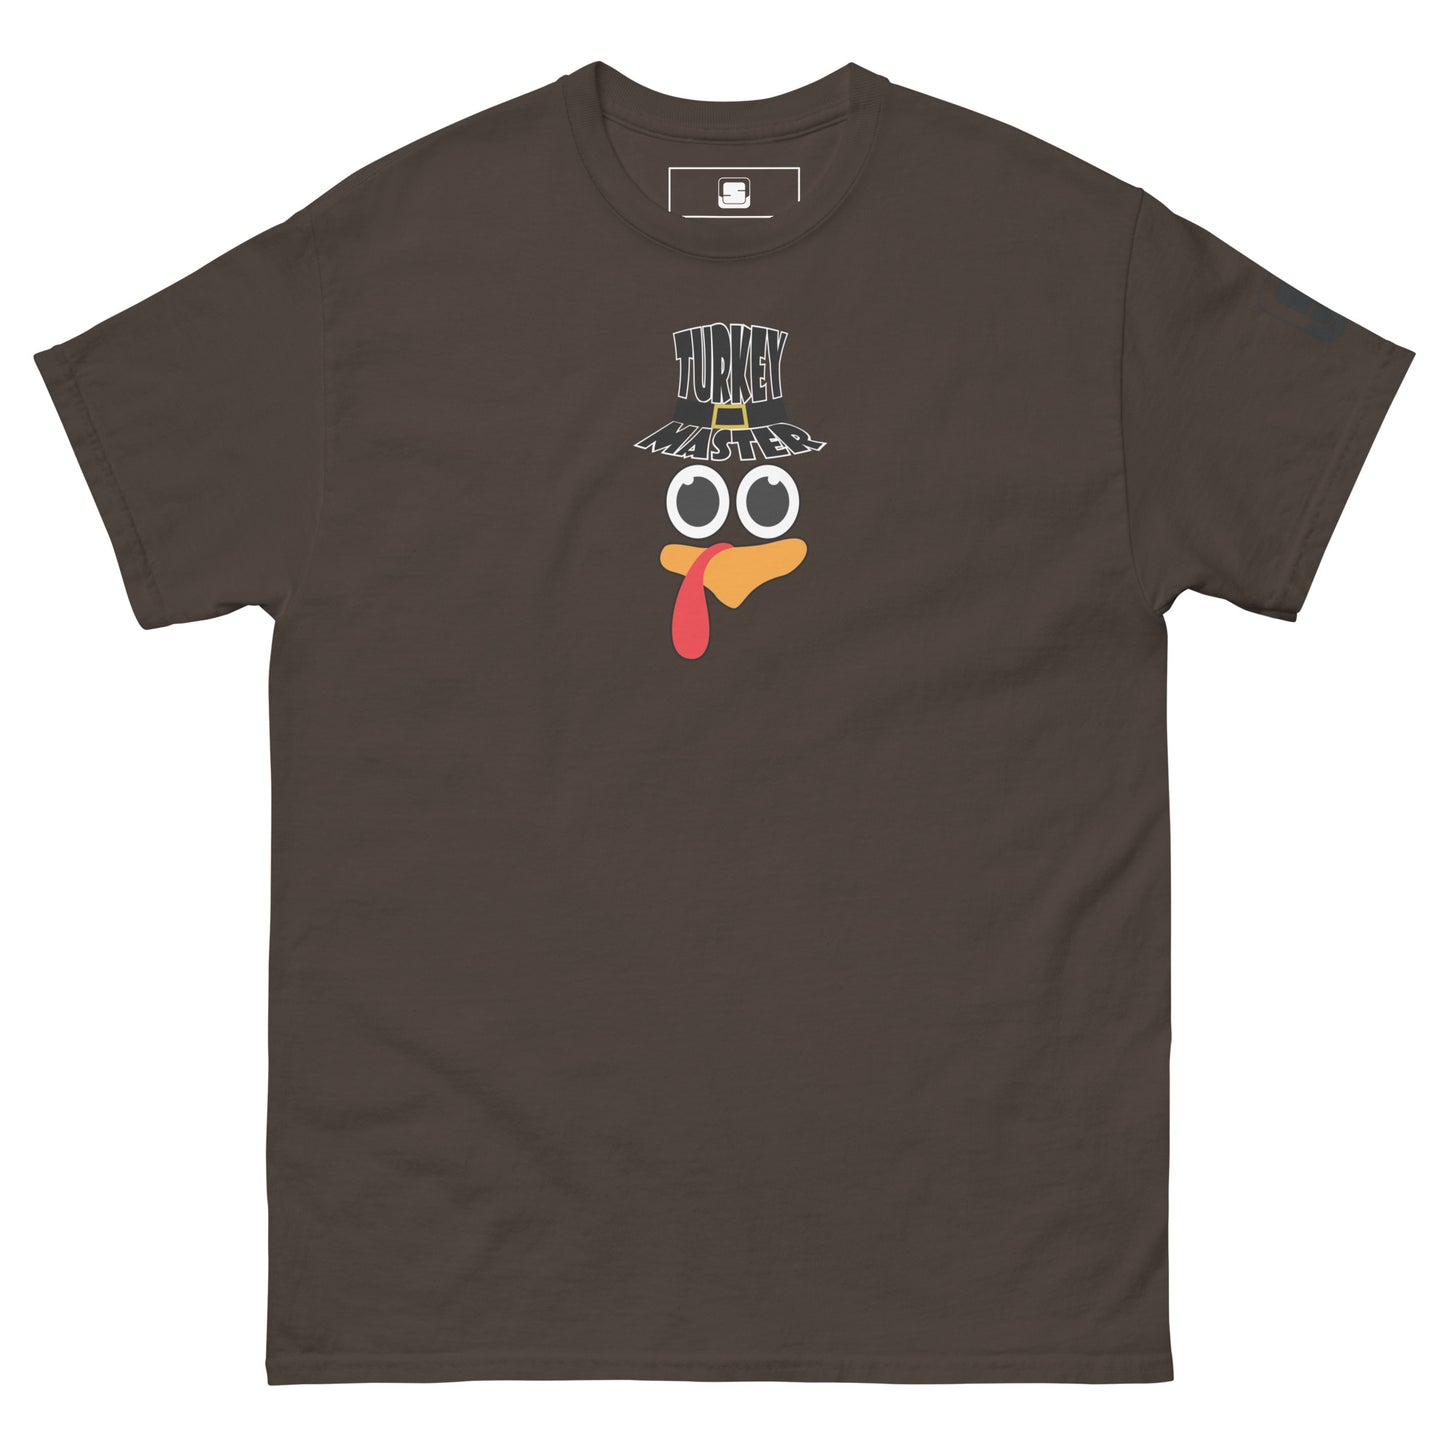 Feathered Feast Champion Shirt: The Turkey Master